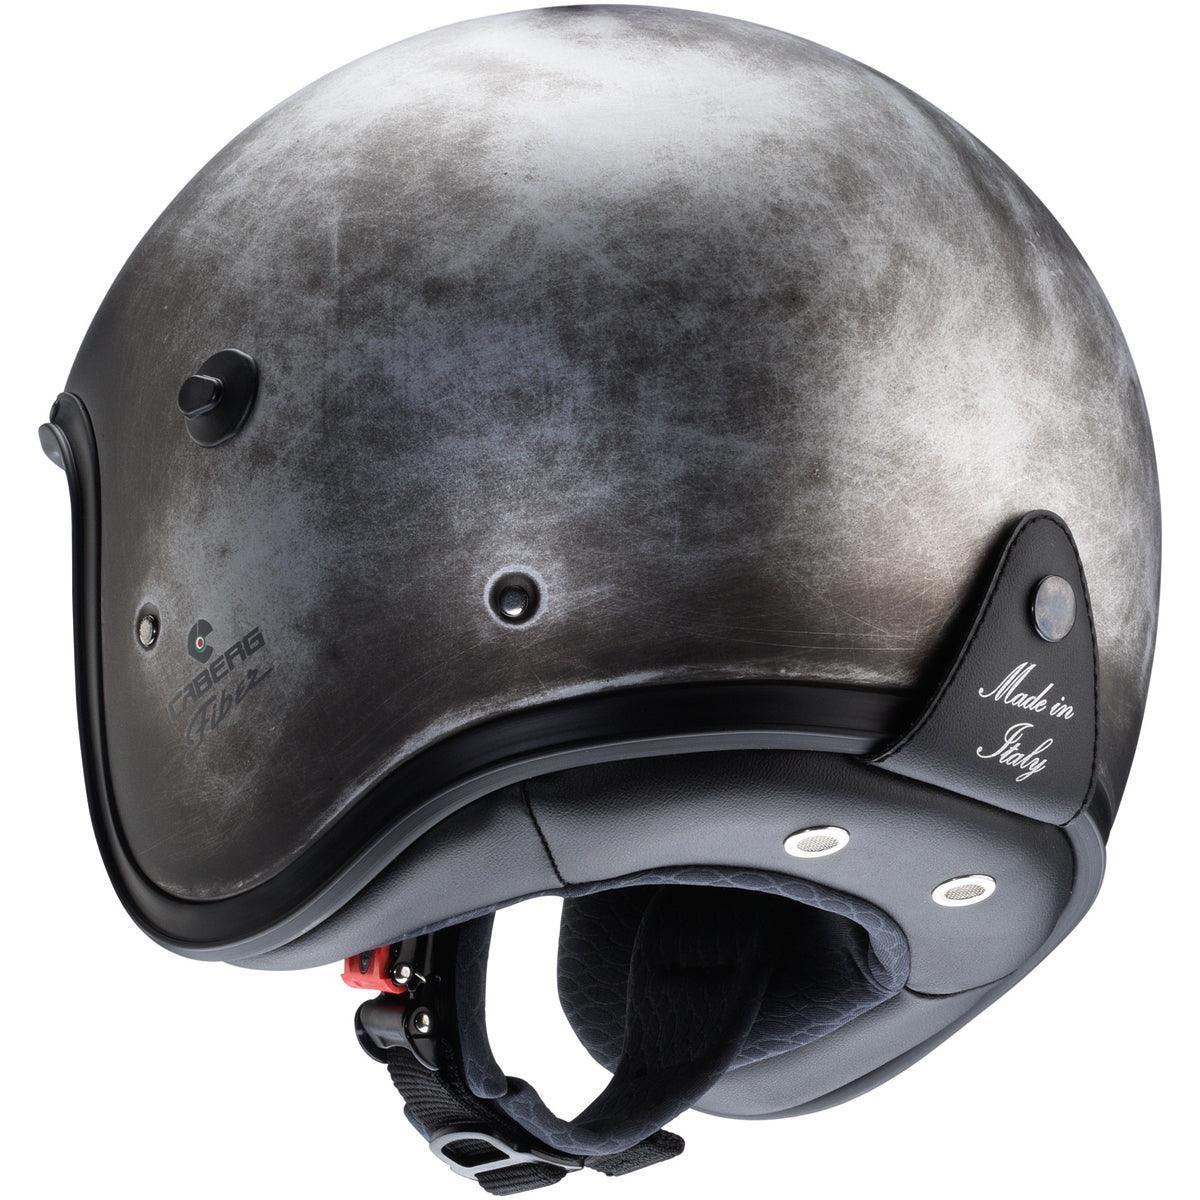 Caberg Freeride Iron Helmet - Black White - getgearedshop